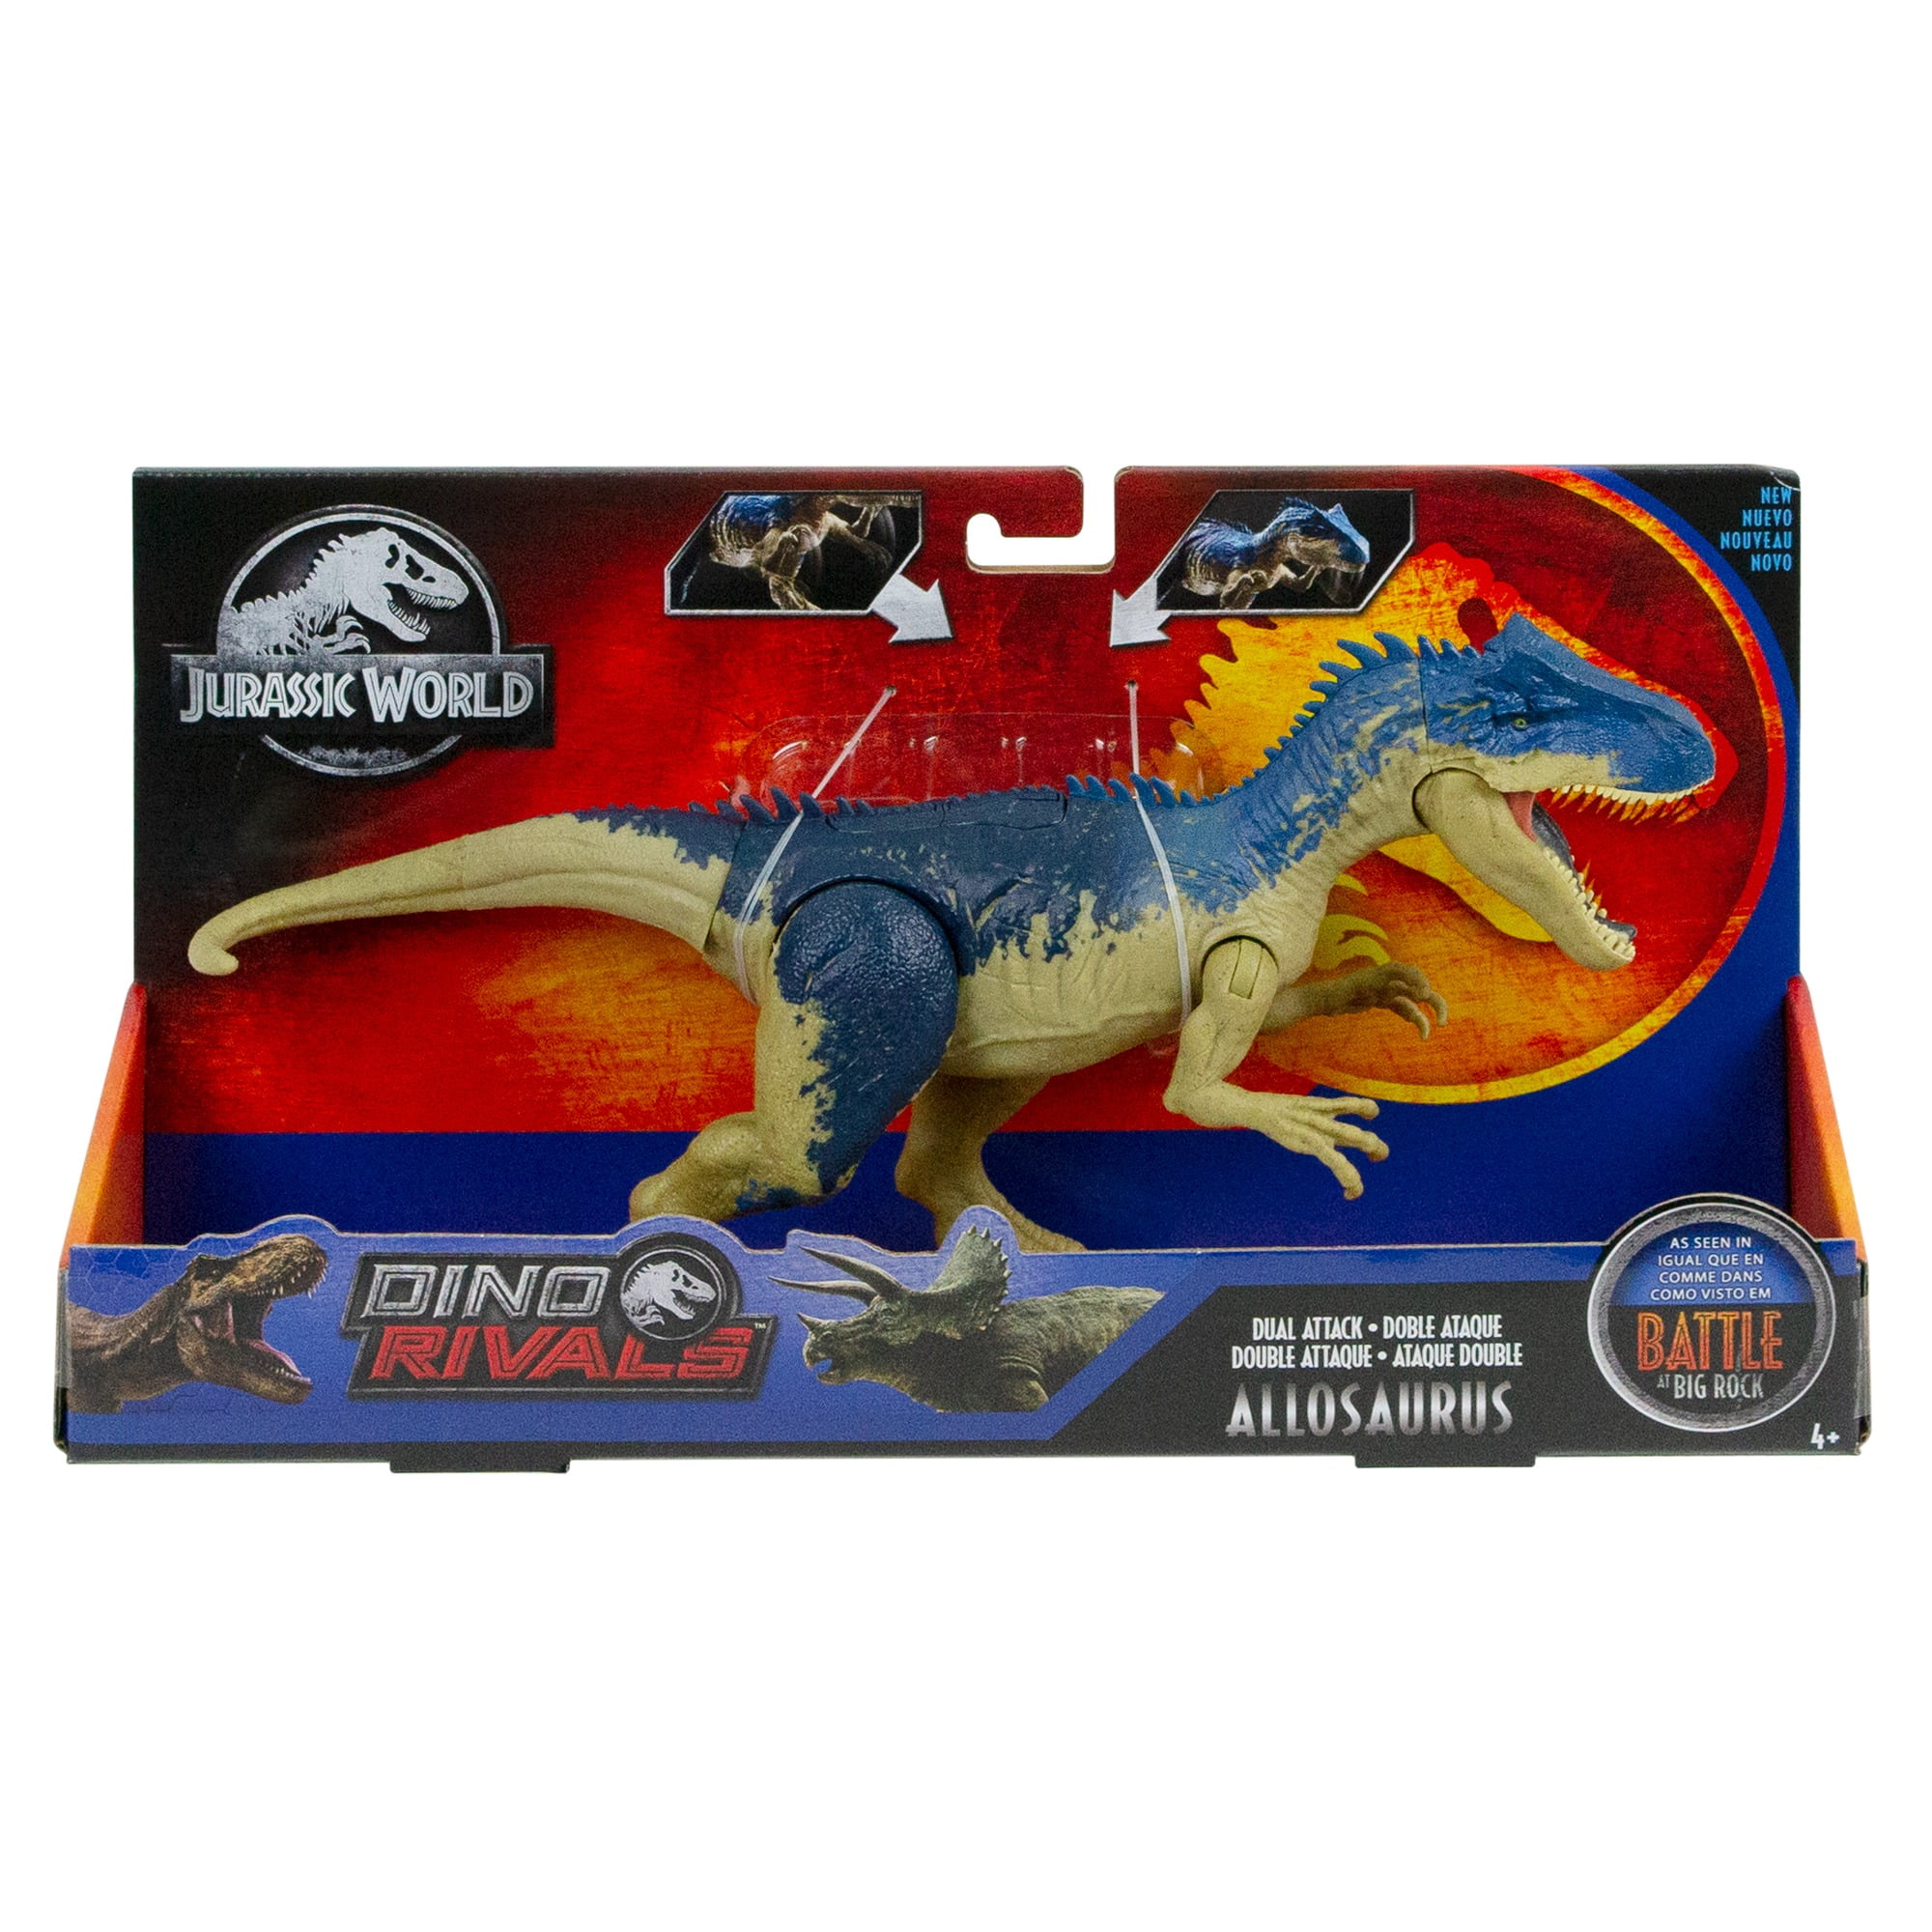 Details about   Jurassic World Park Allosaurus Dinosaur Action Figure Model Toy For Children 